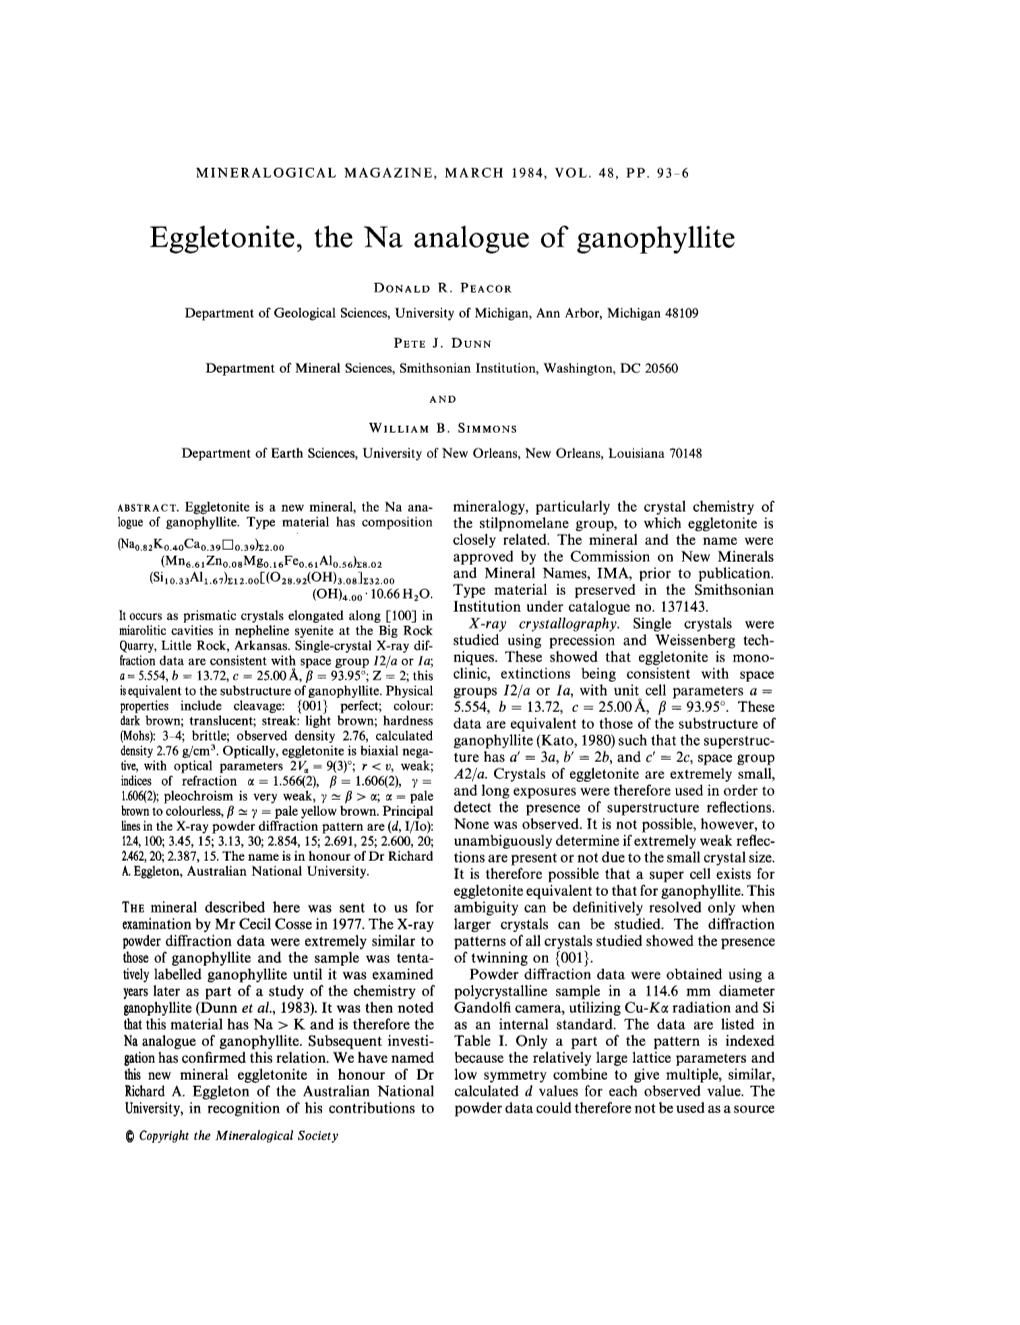 Eggletonite, the Na Analogue of Ganophyllite